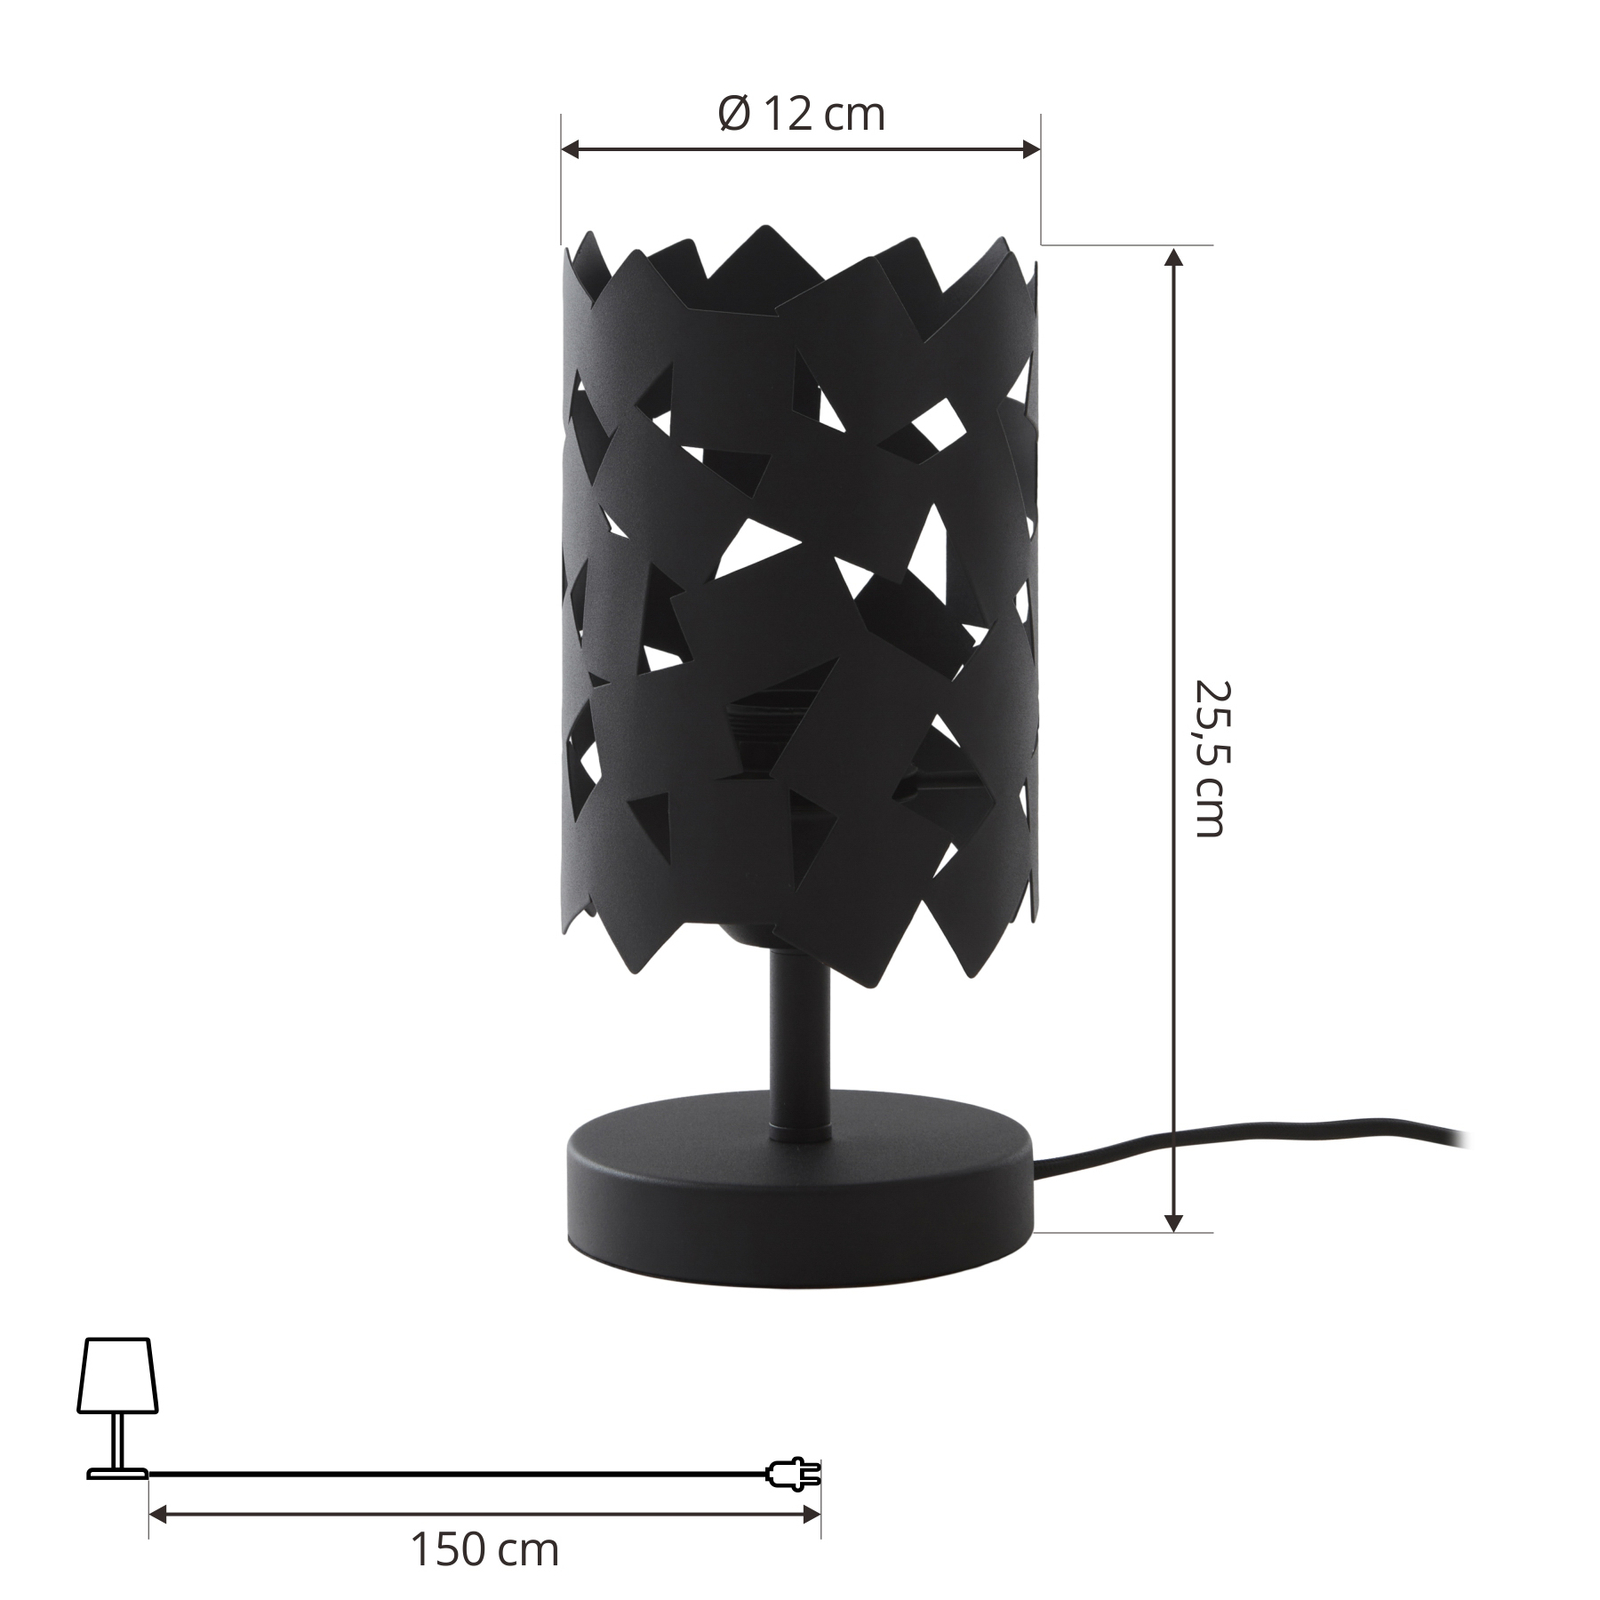 Lucande tafellamp Aeloria, zwart, ijzer, Ø 12 cm, E27